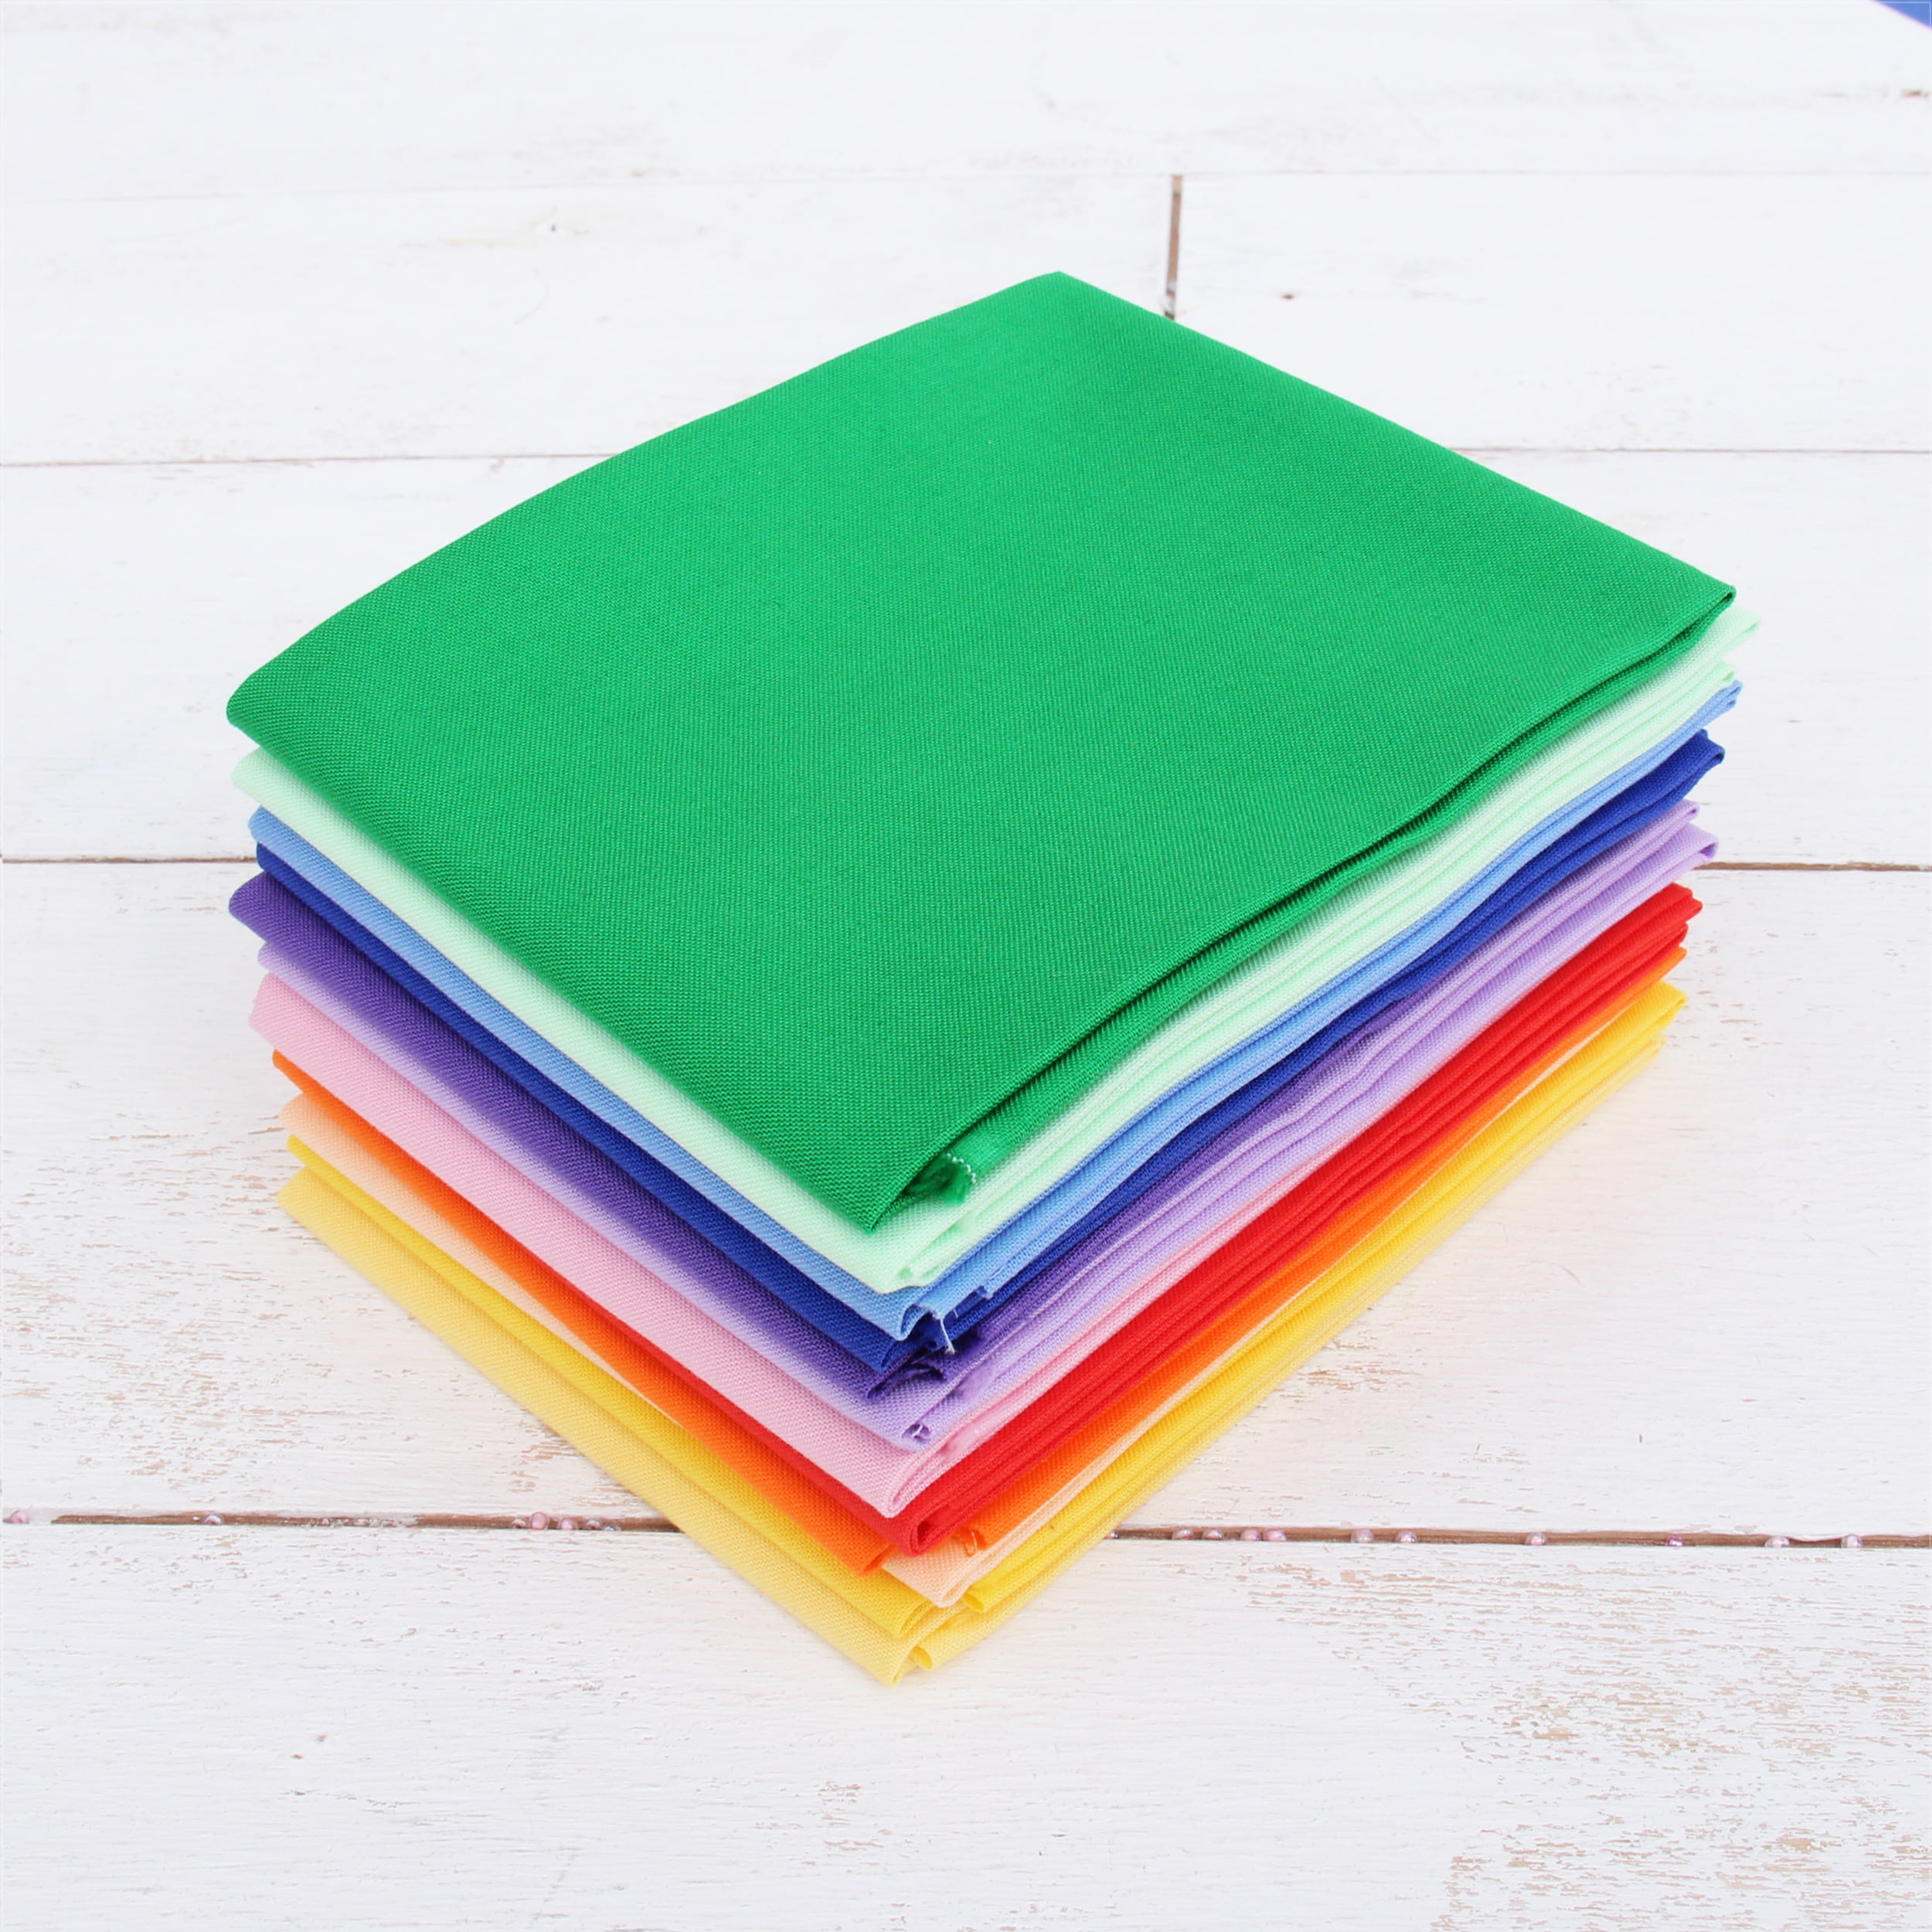 Threadart 6 Fat Quarter Bundles - Yellow Color Builder Prints 100% Cotton  Fabric - Premium 100% Cotton Quilting Fabric - No Duplicates - Full Size Fat  Quarters 18x21 